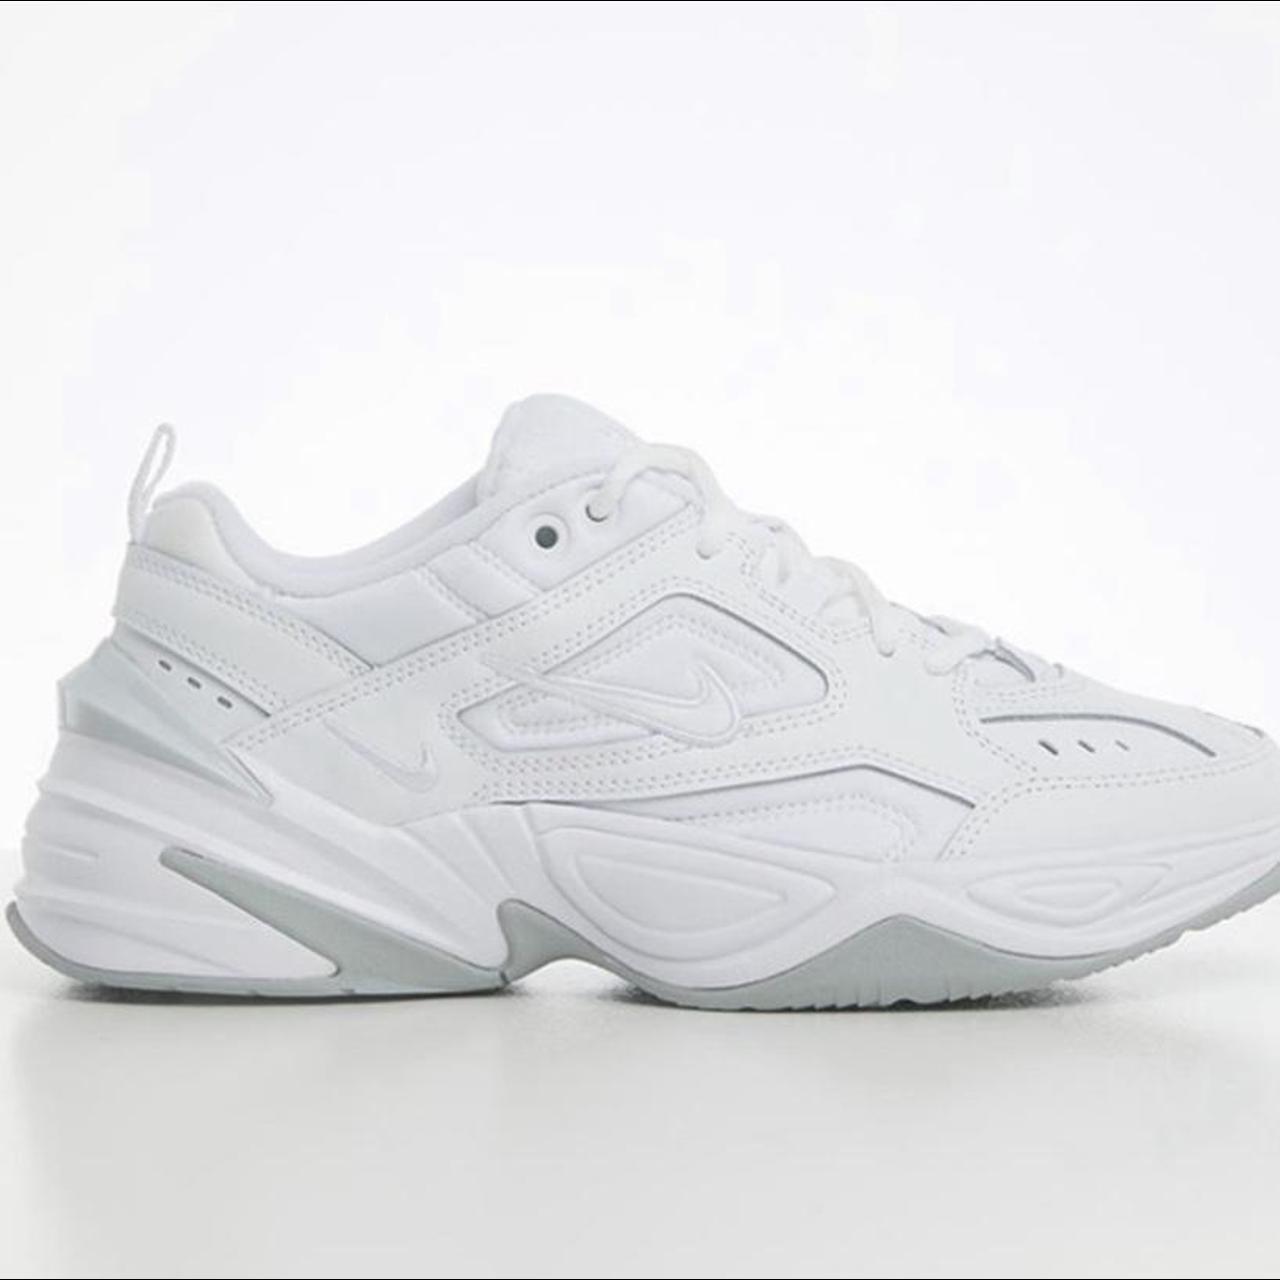 Product Image 1 - Nike M2k Tekno white shoes